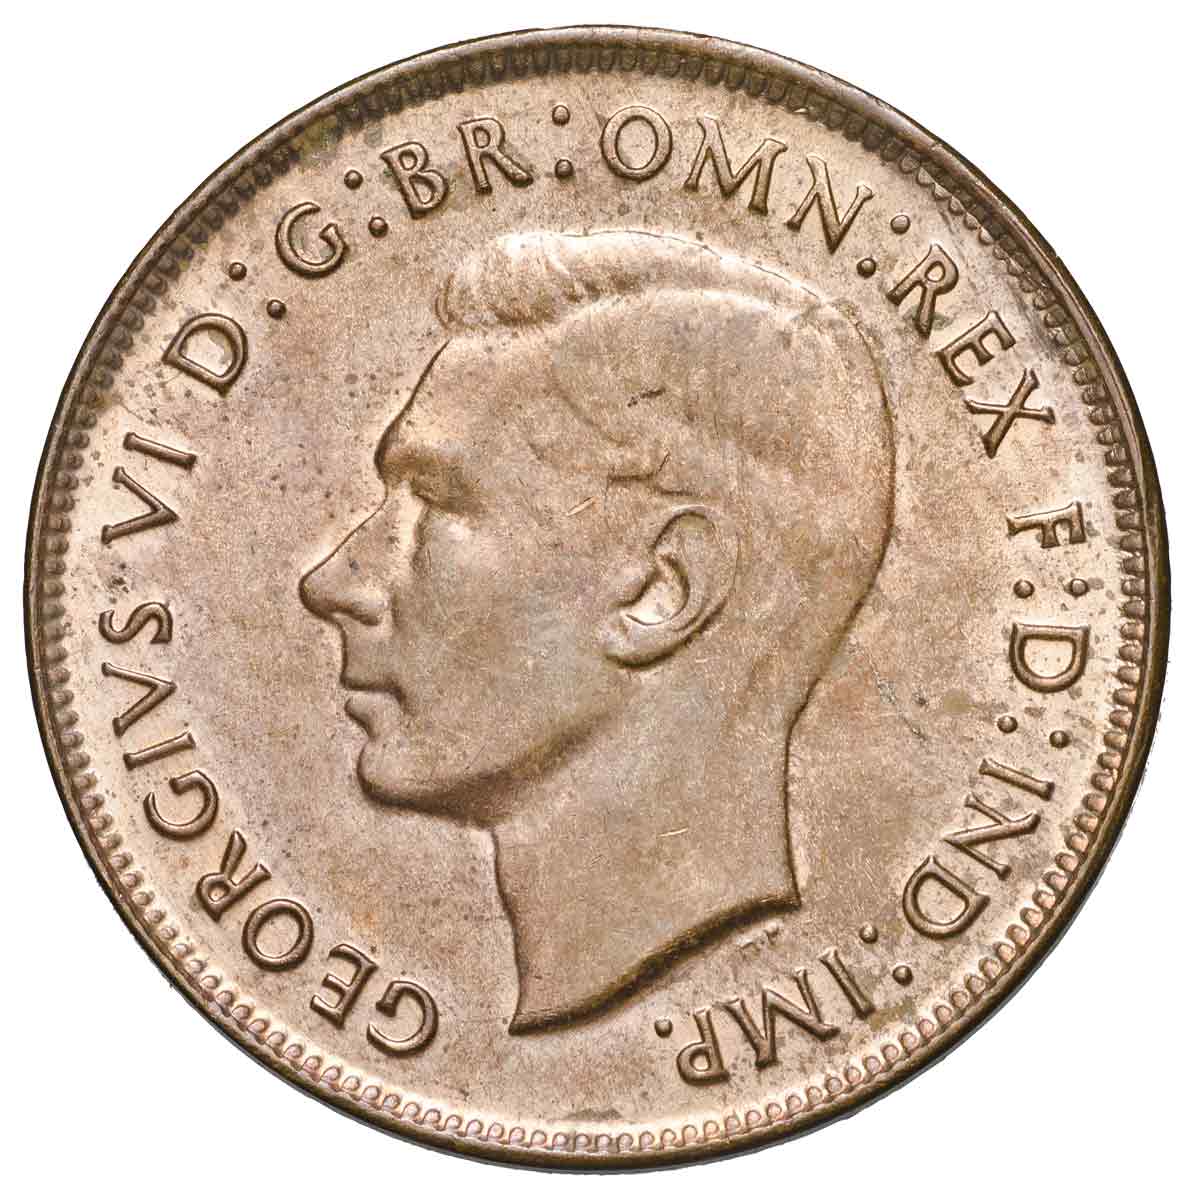 1948 Penny Uncirculated